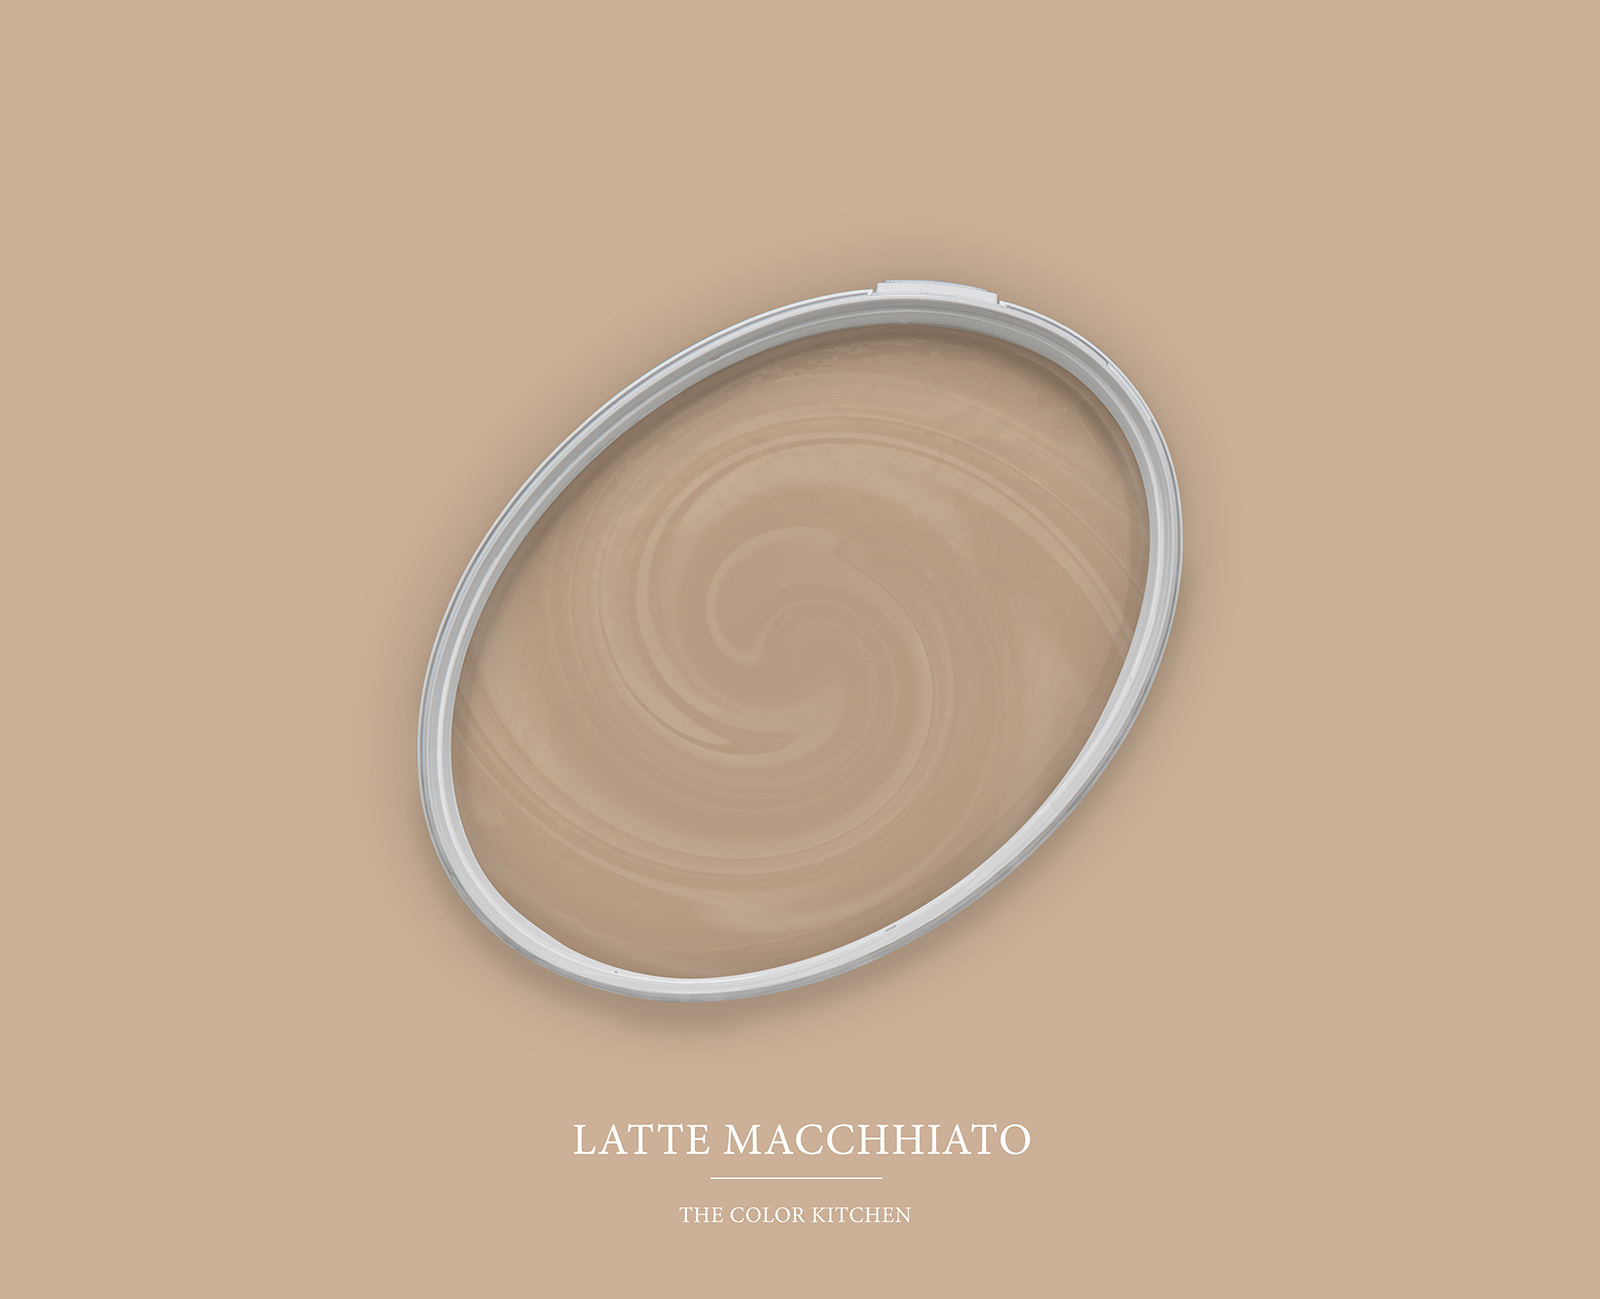 Wall Paint TCK6010 »Latte Macchhiato« in natural beige – 5.0 litre
